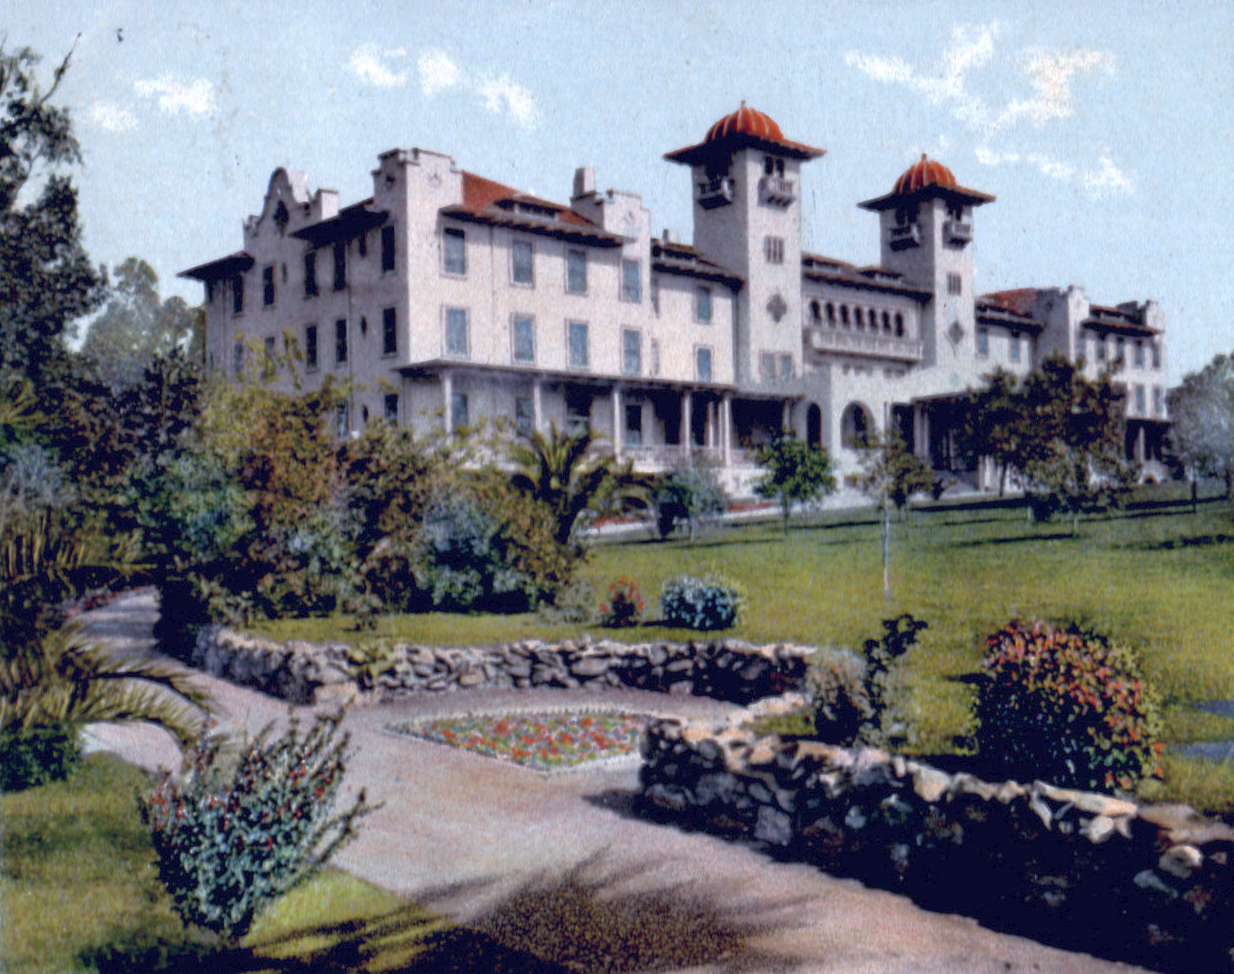 Byron Hot Springs Hotel (1905 Image)